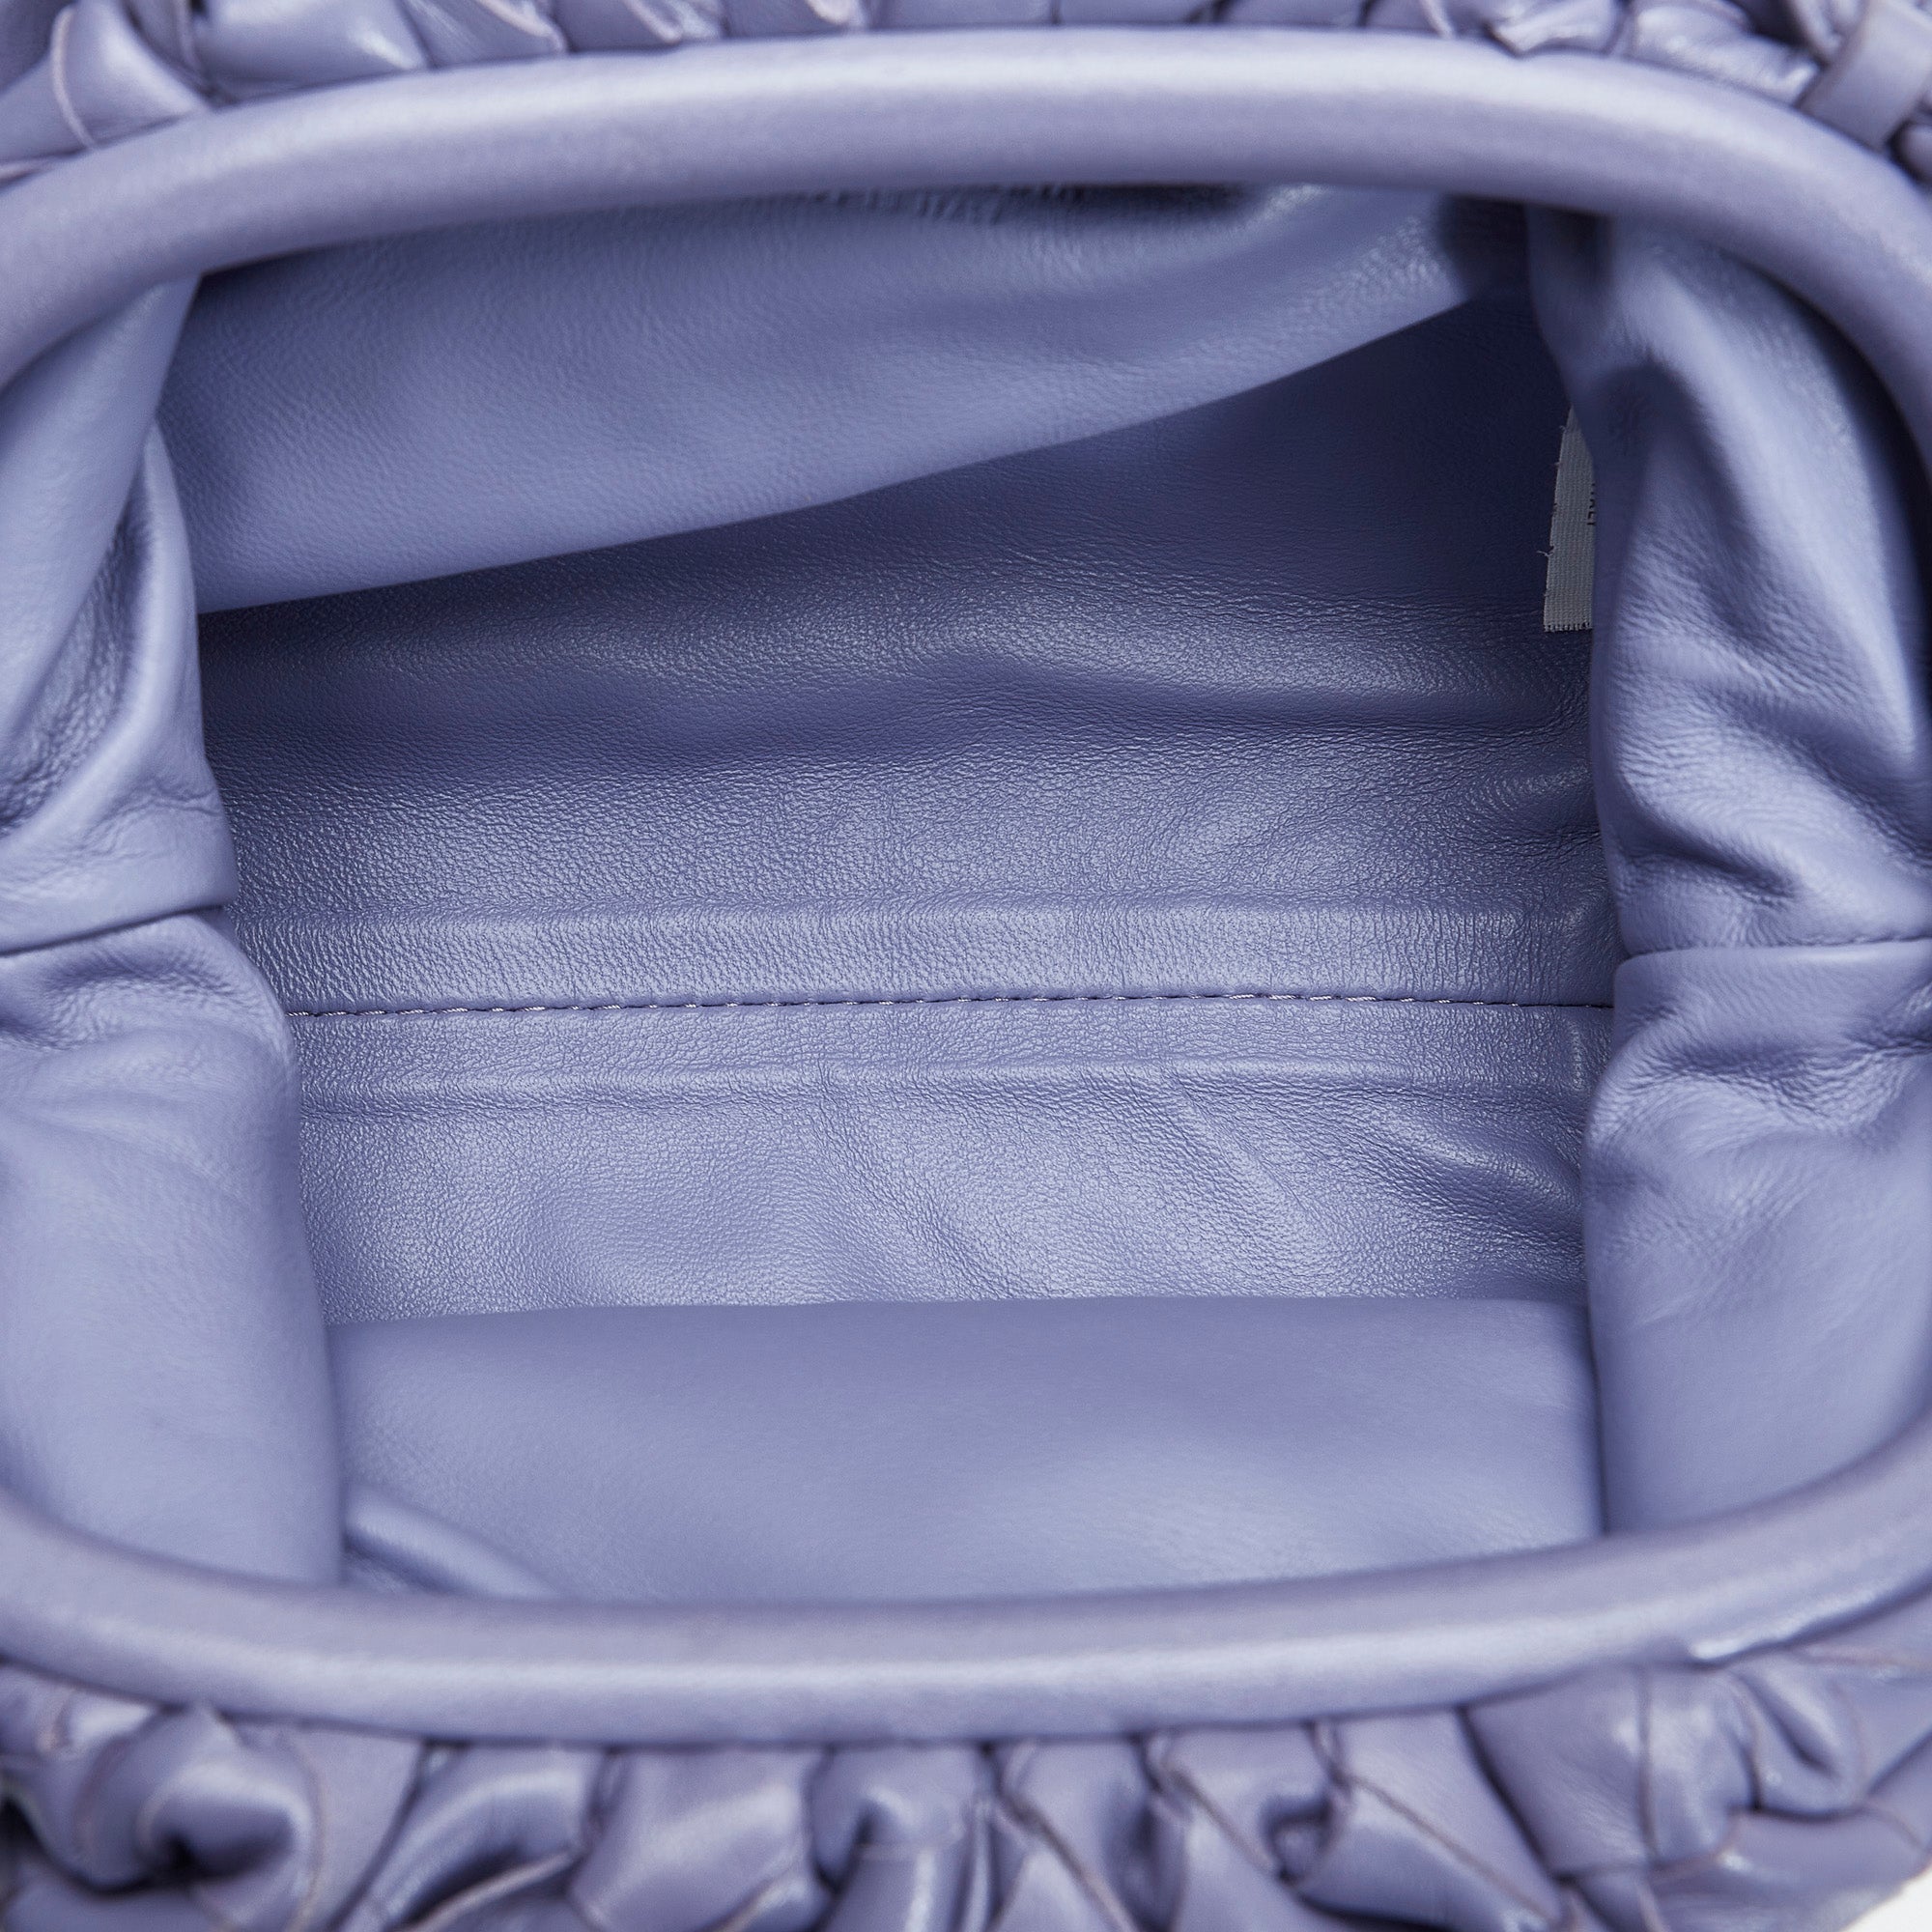 Bottega Veneta The Mini Pouch Crossbody Bag in Silver & Silver